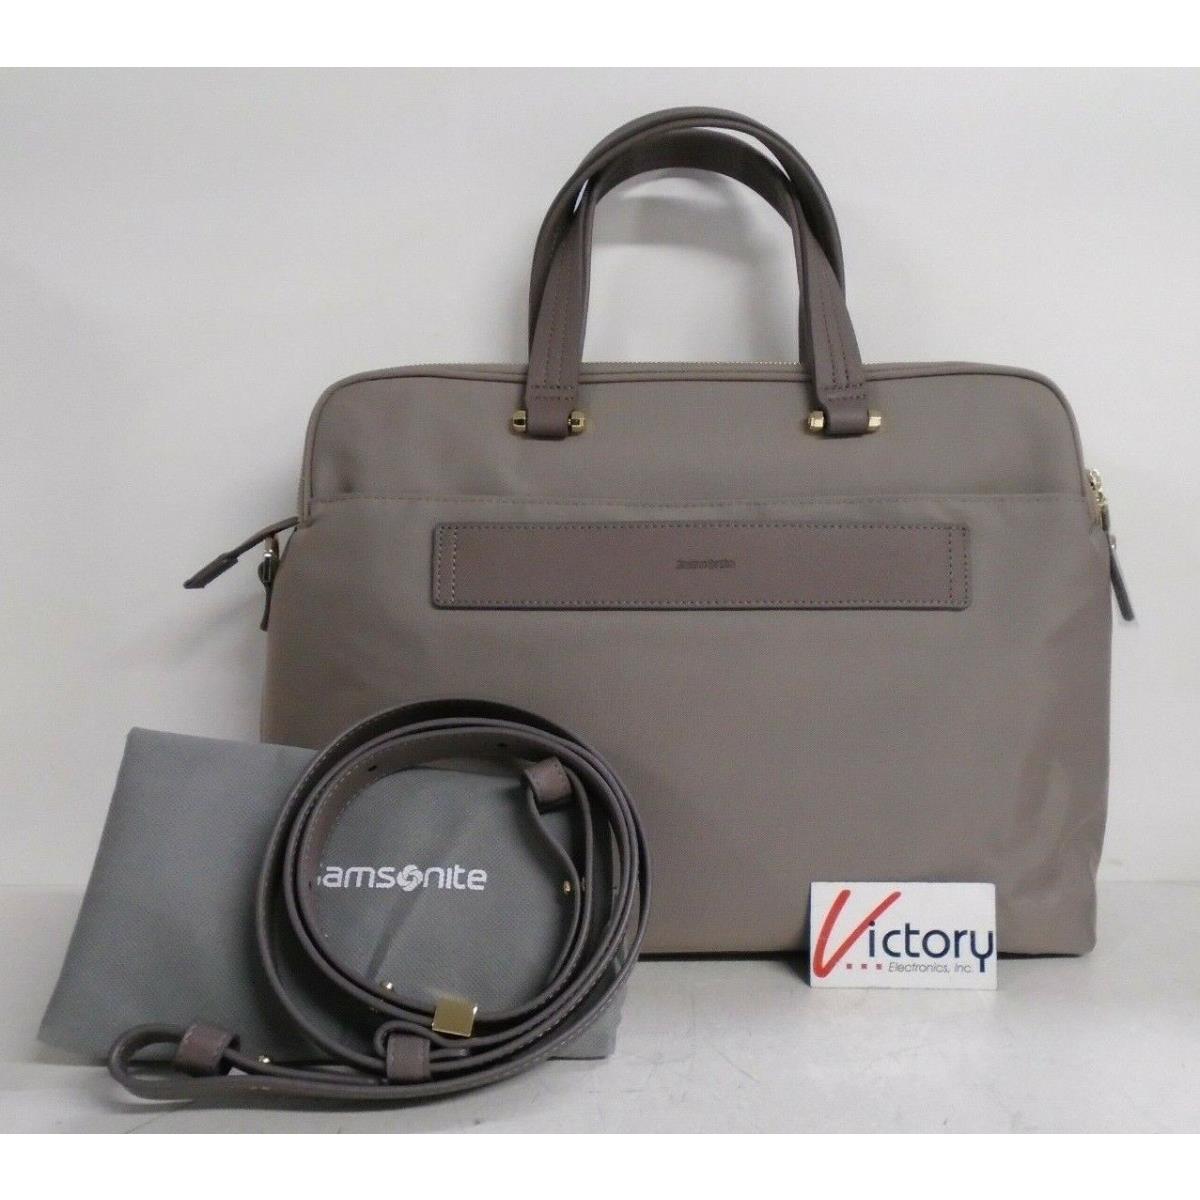 Samsonite Zalia Organized Bail Handle 14.1 Laptop Bag Beige - 74555-1030